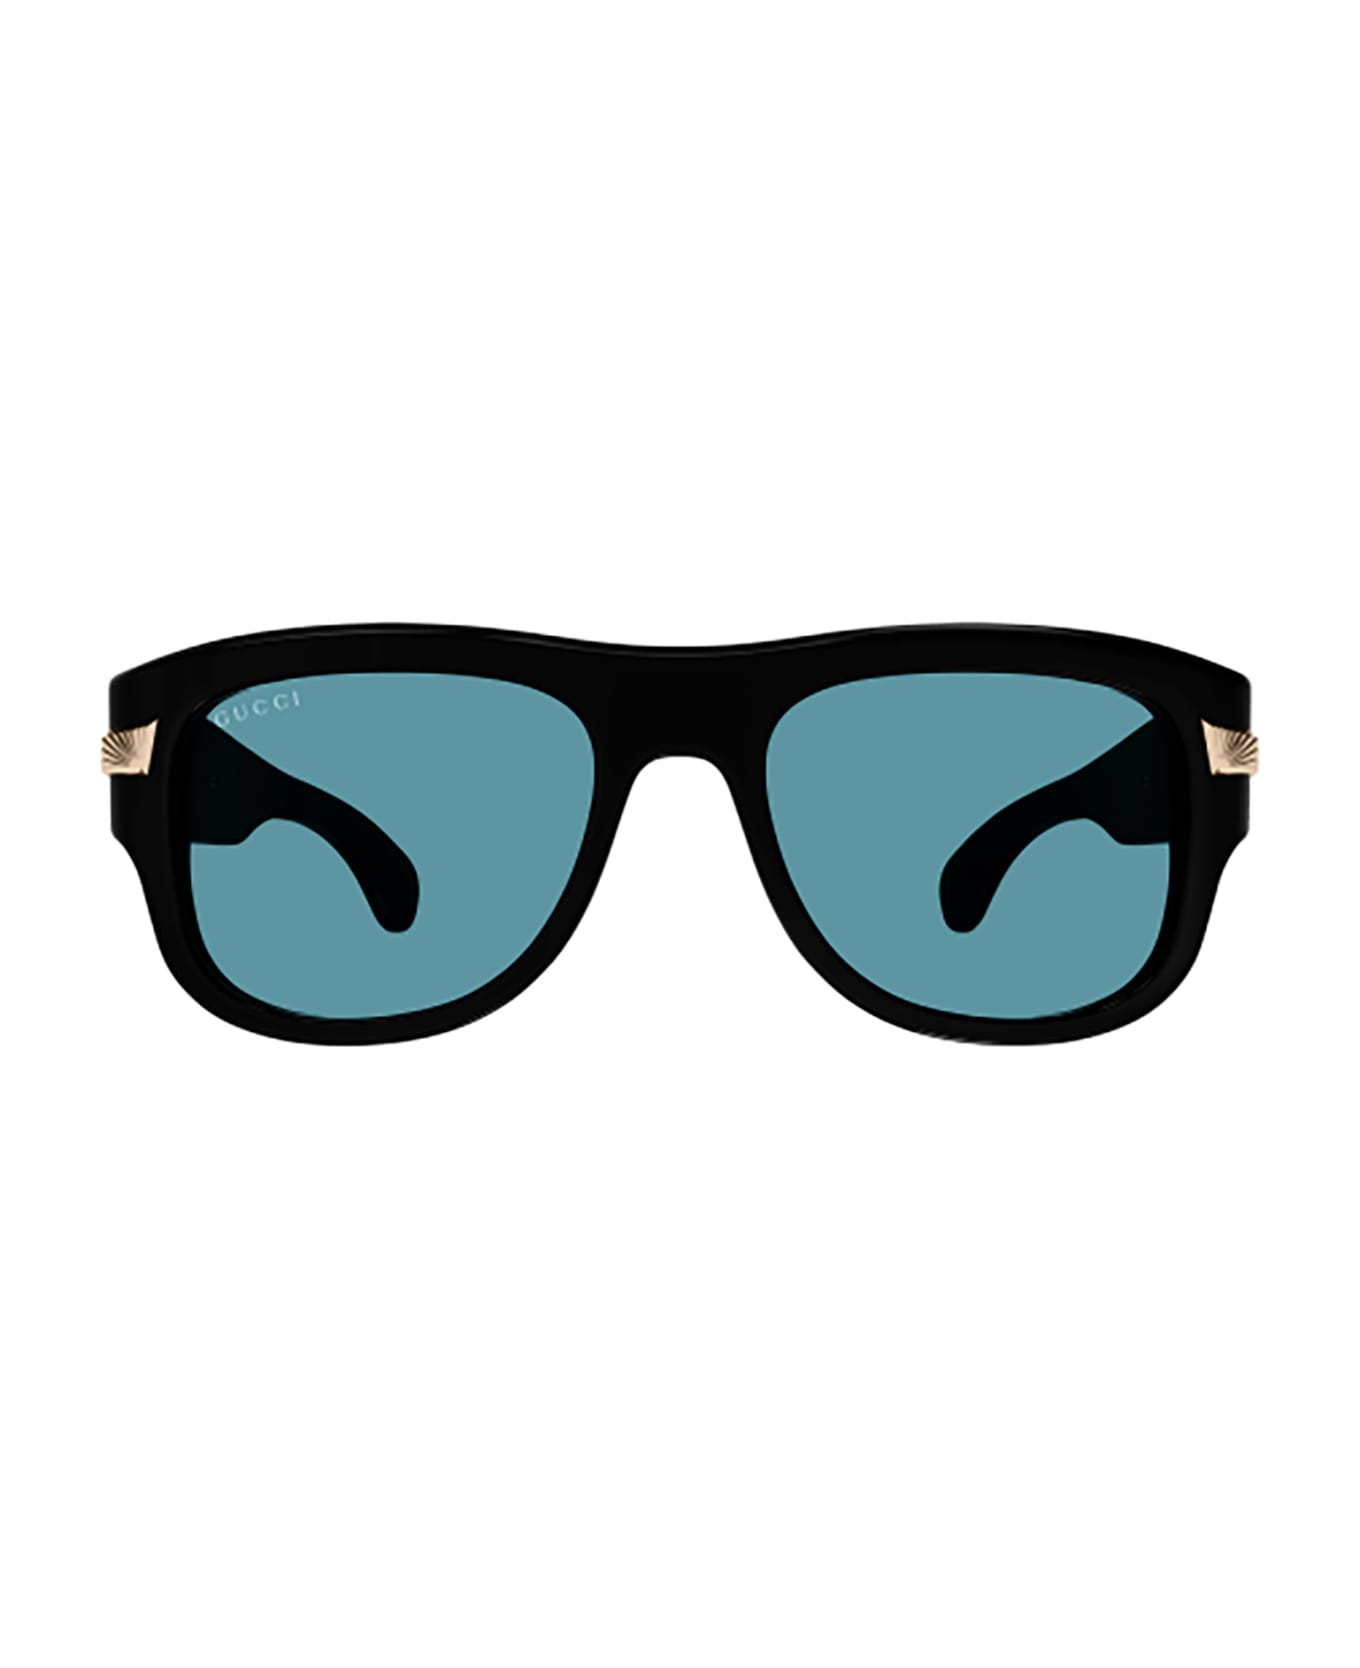 Gucci Eyewear Gg1517s Sunglasses - 002 black black blue